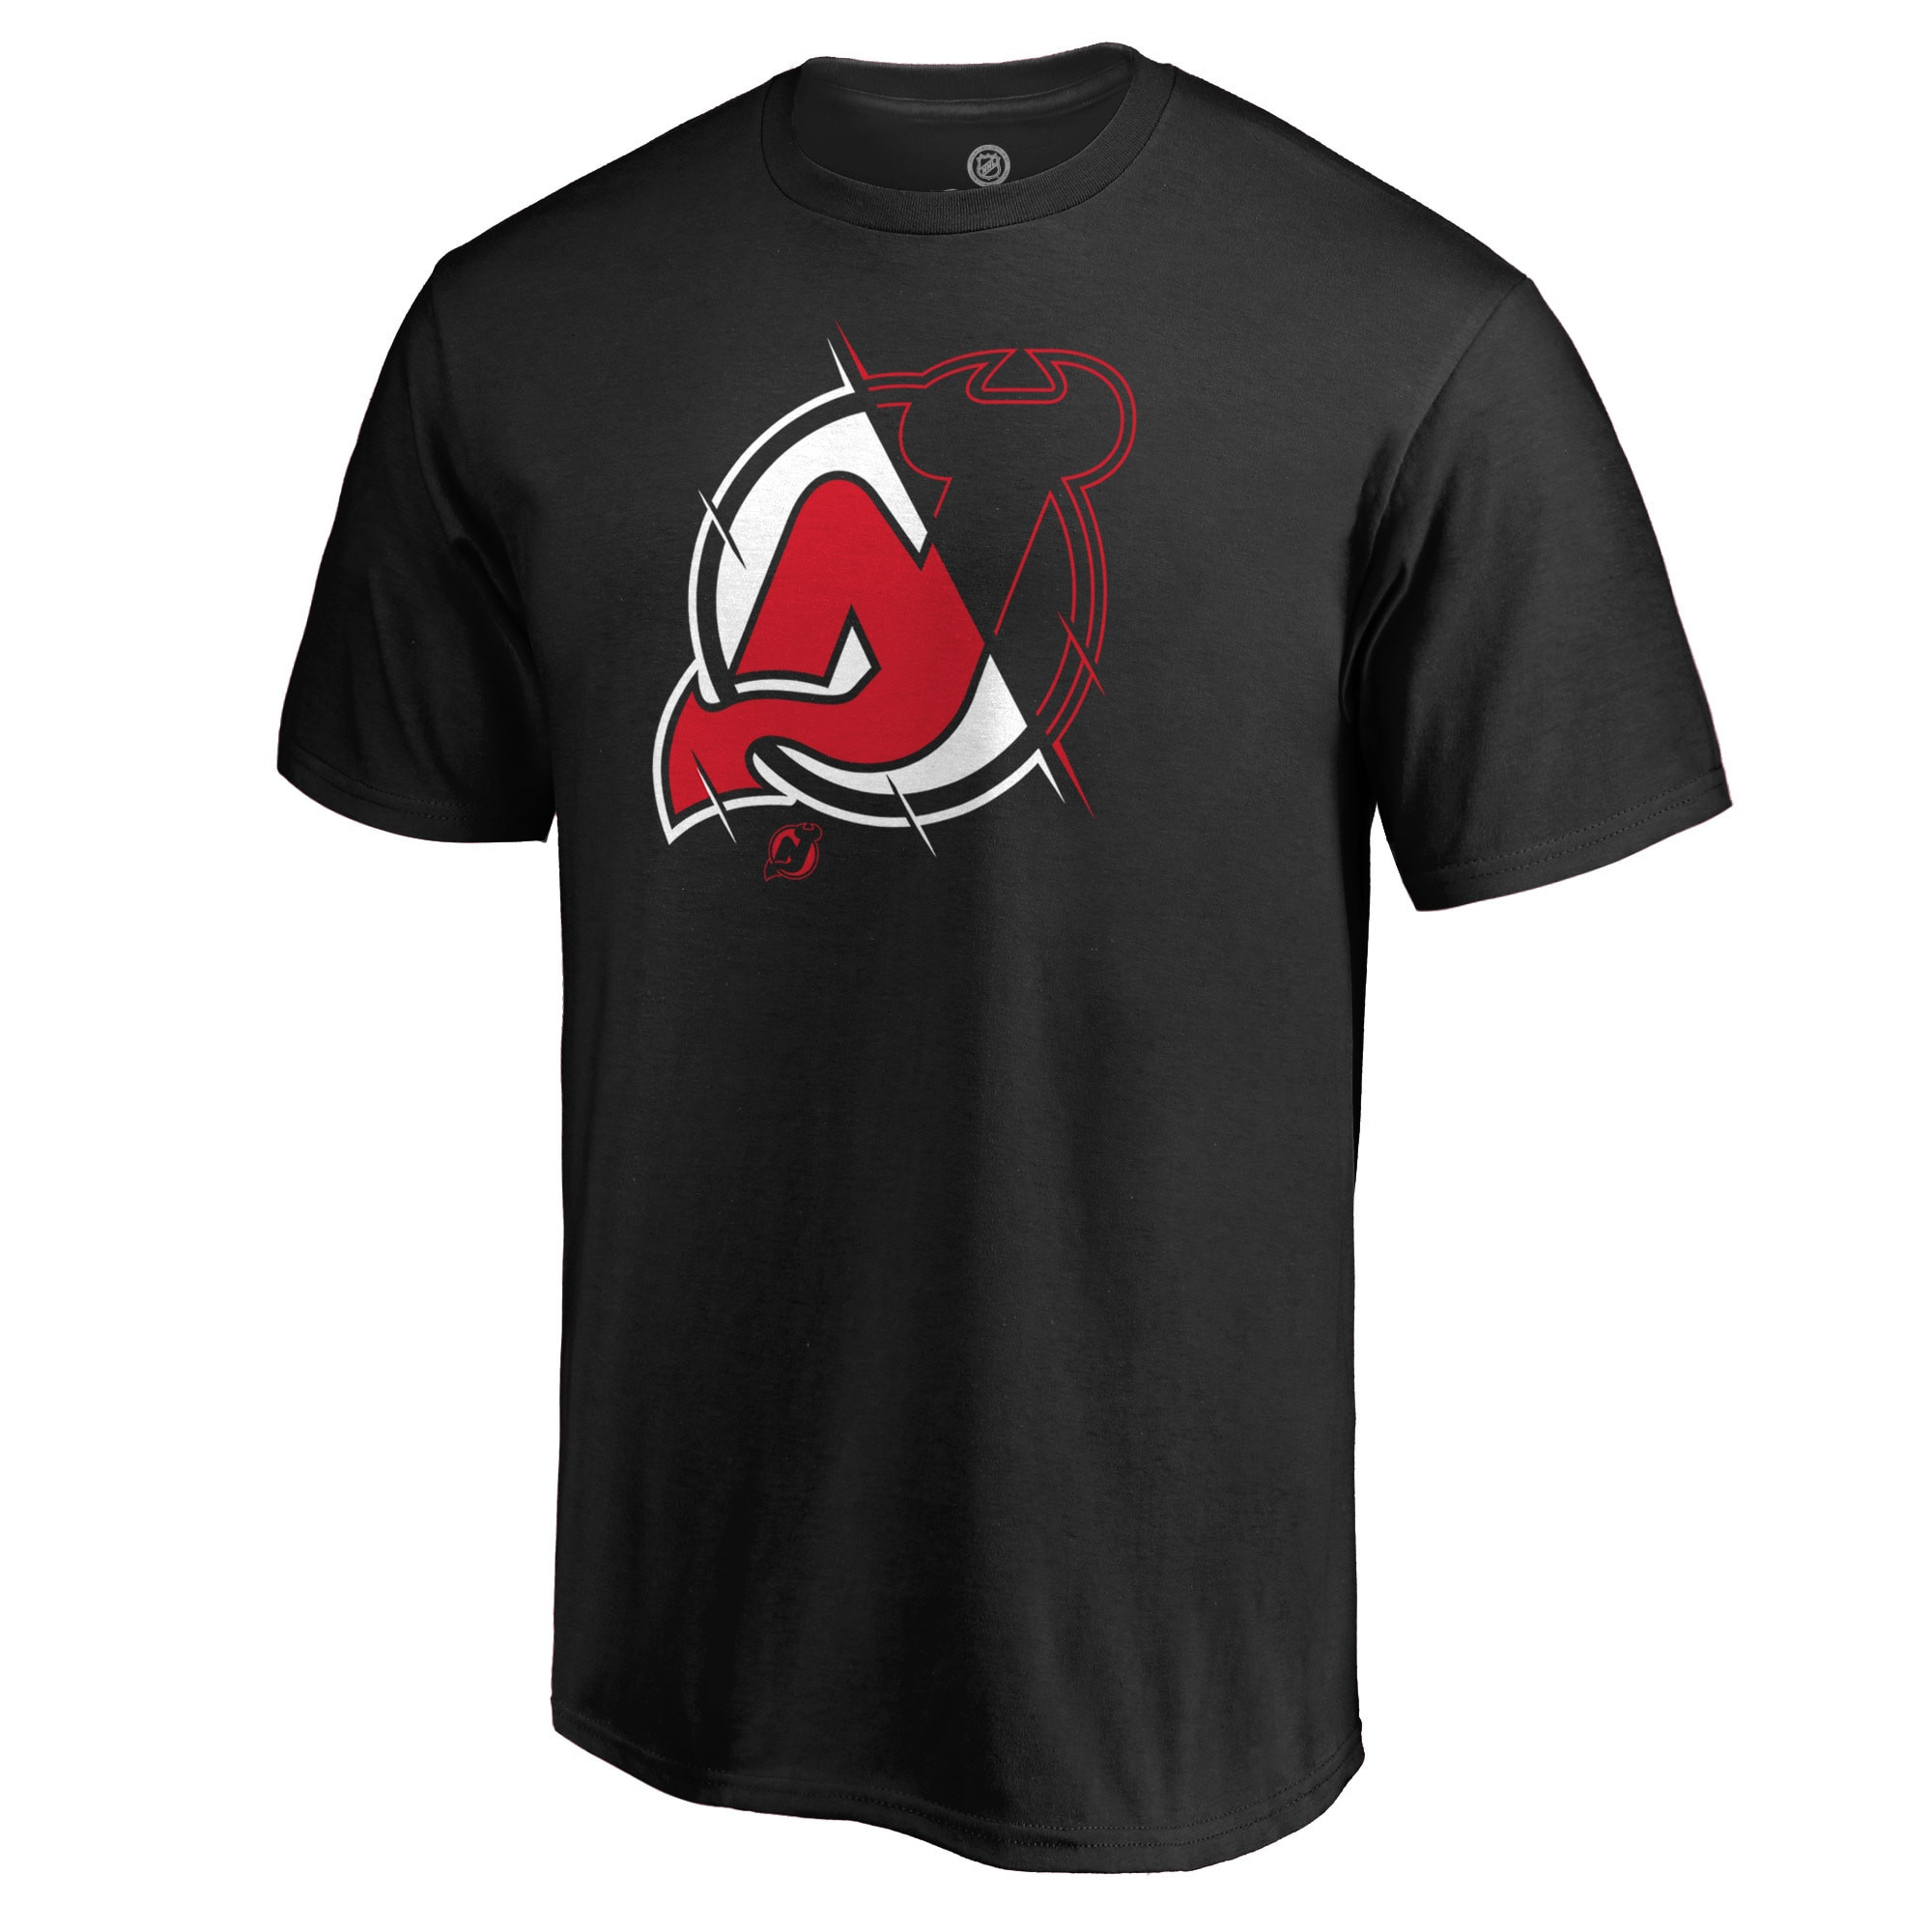 Men's Fanatics Branded Black New Shirt Devils X-Ray T-Shirt